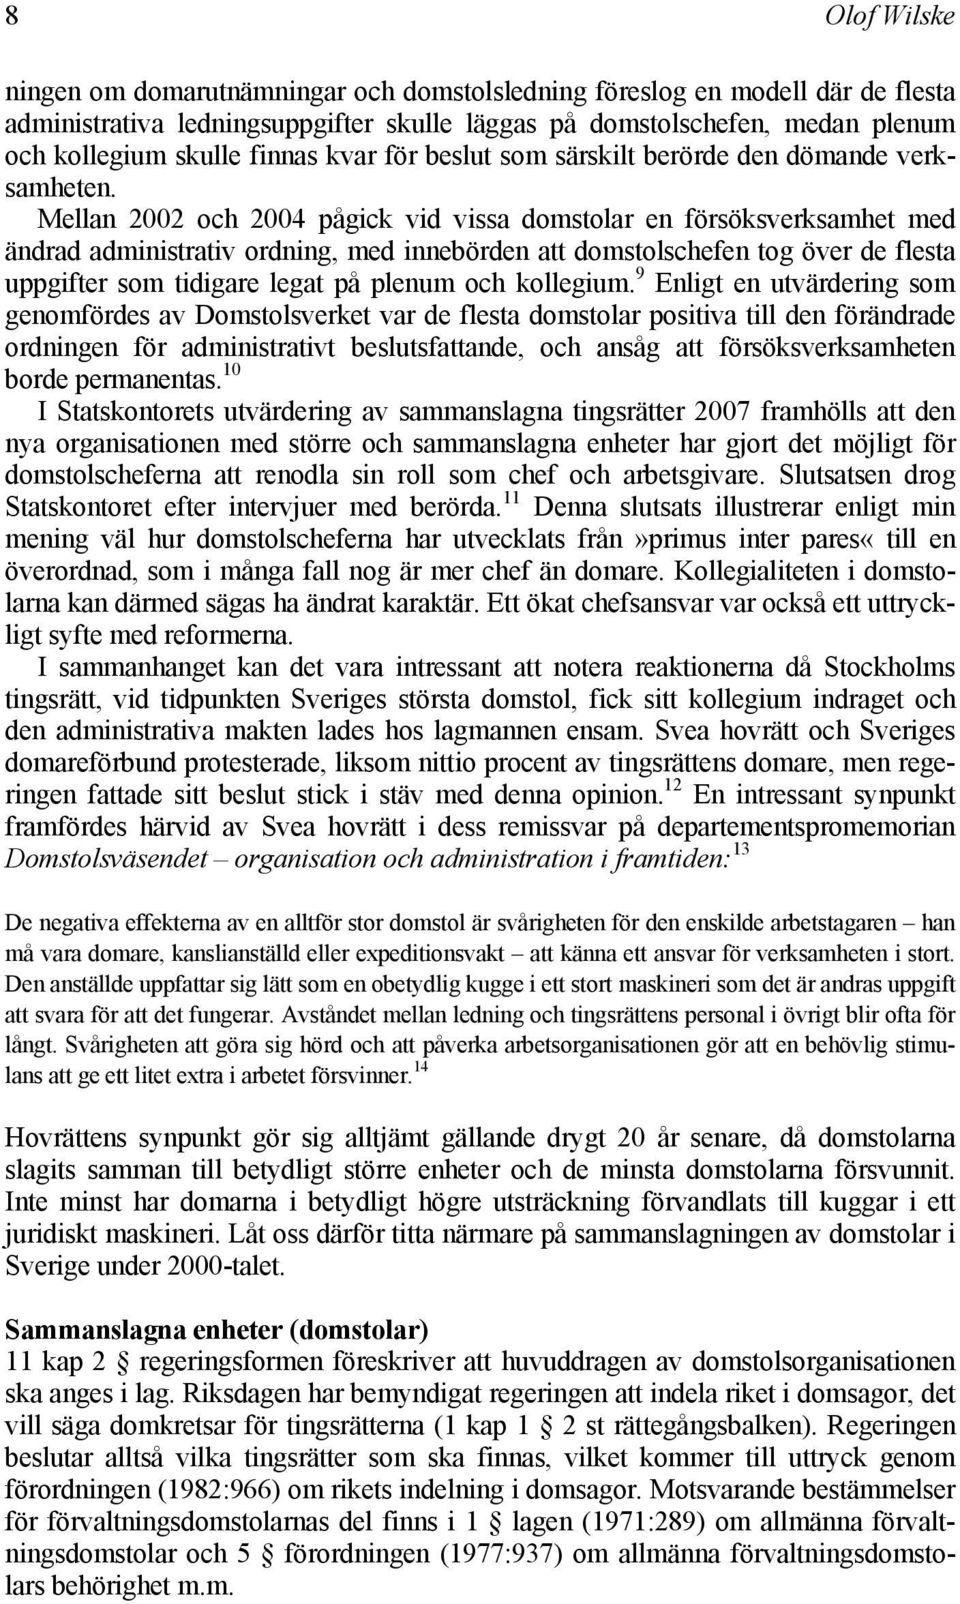 Strukturreformer i svenskt domstolsväsende - PDF Gratis nedladdning